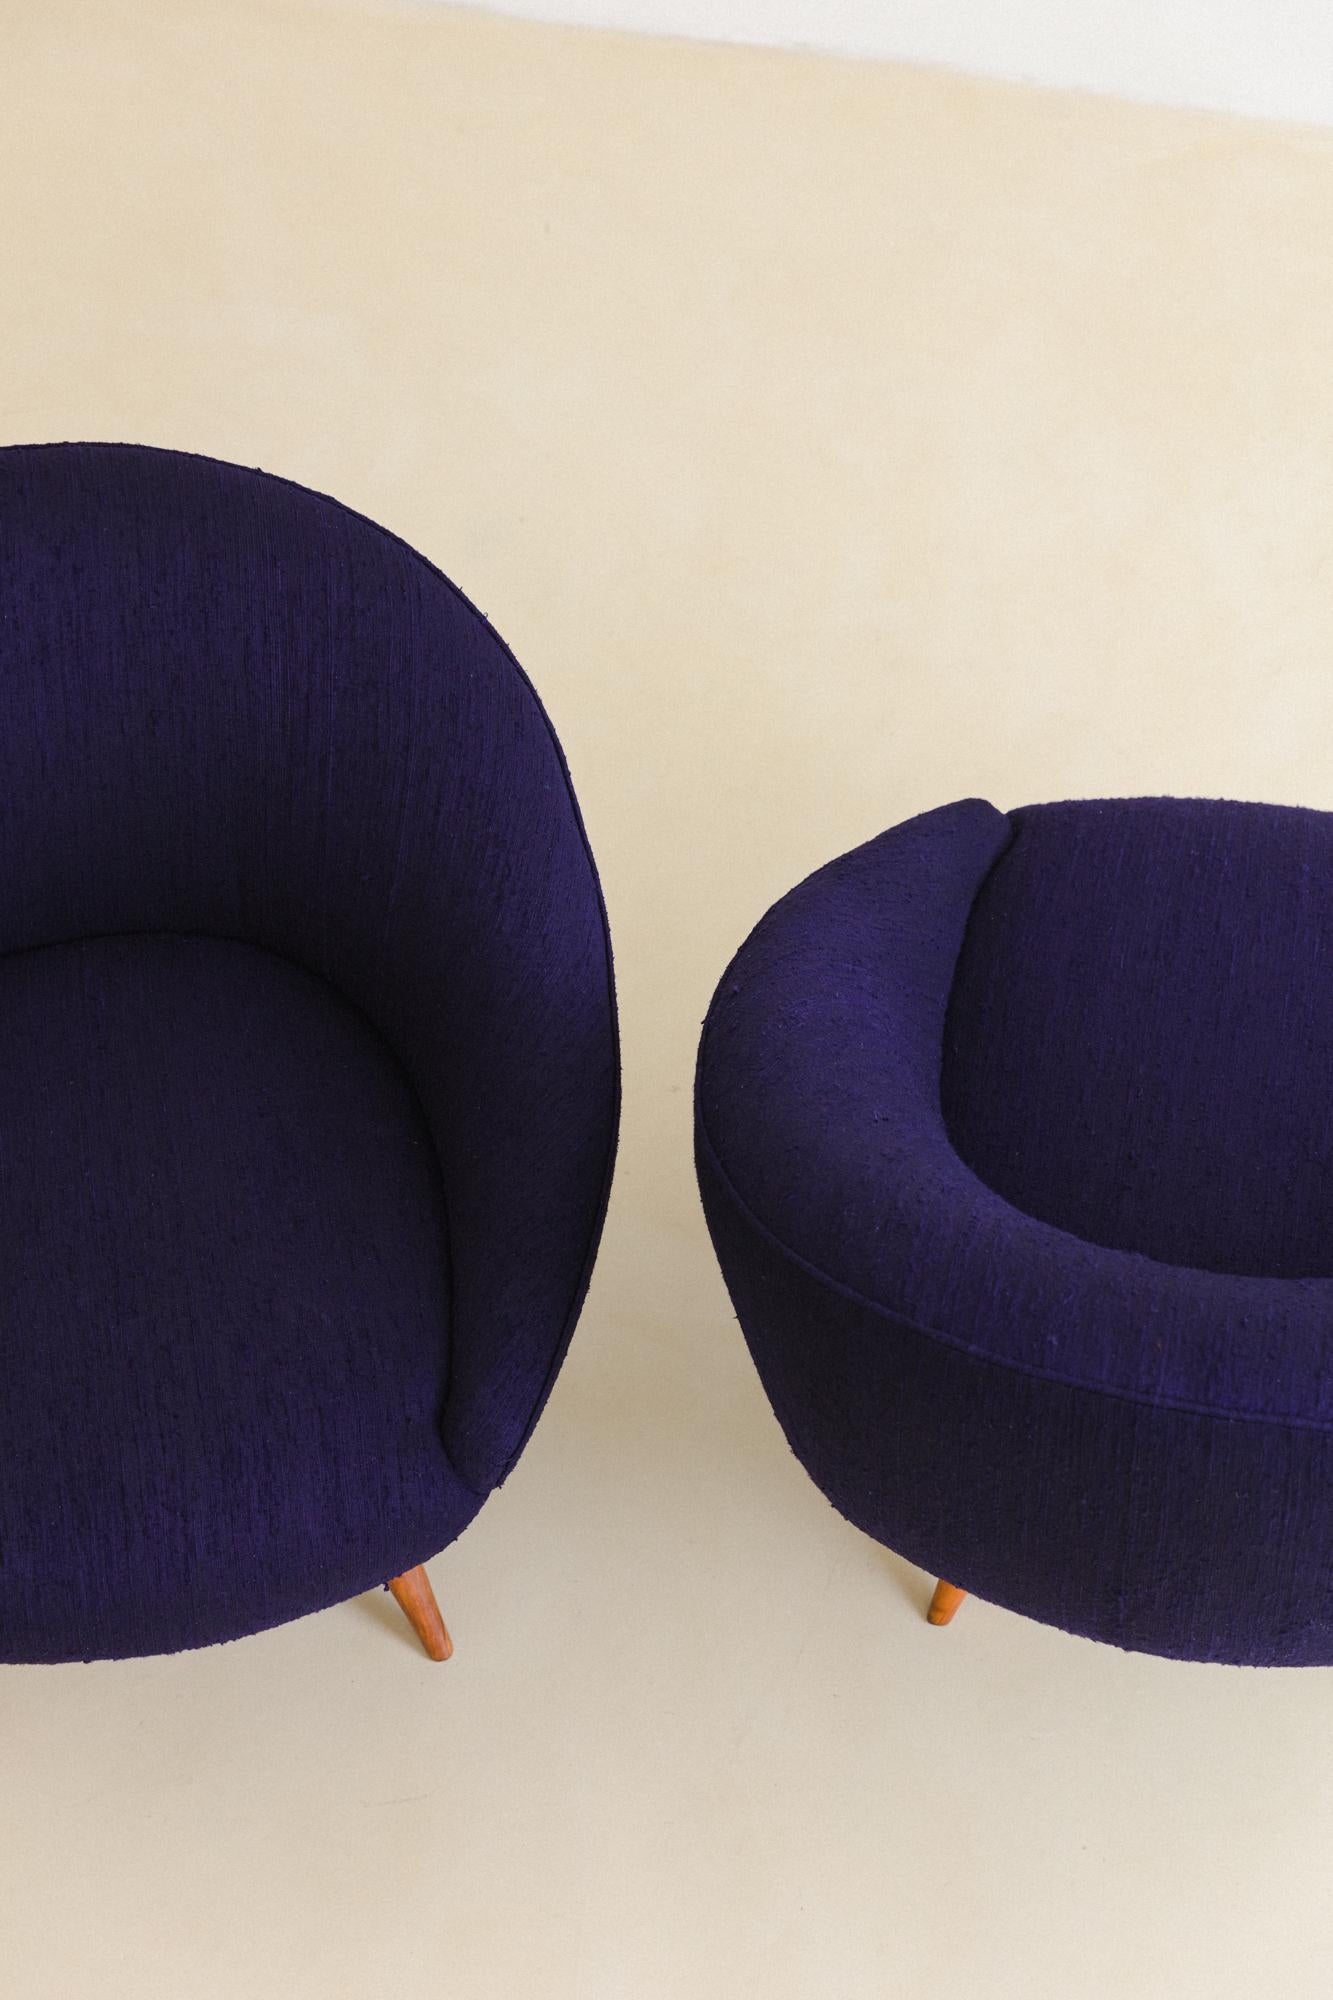 Brazilian Midcentury Design, Round Armchairs, Organic Silk Upholstery, 1950s For Sale 9